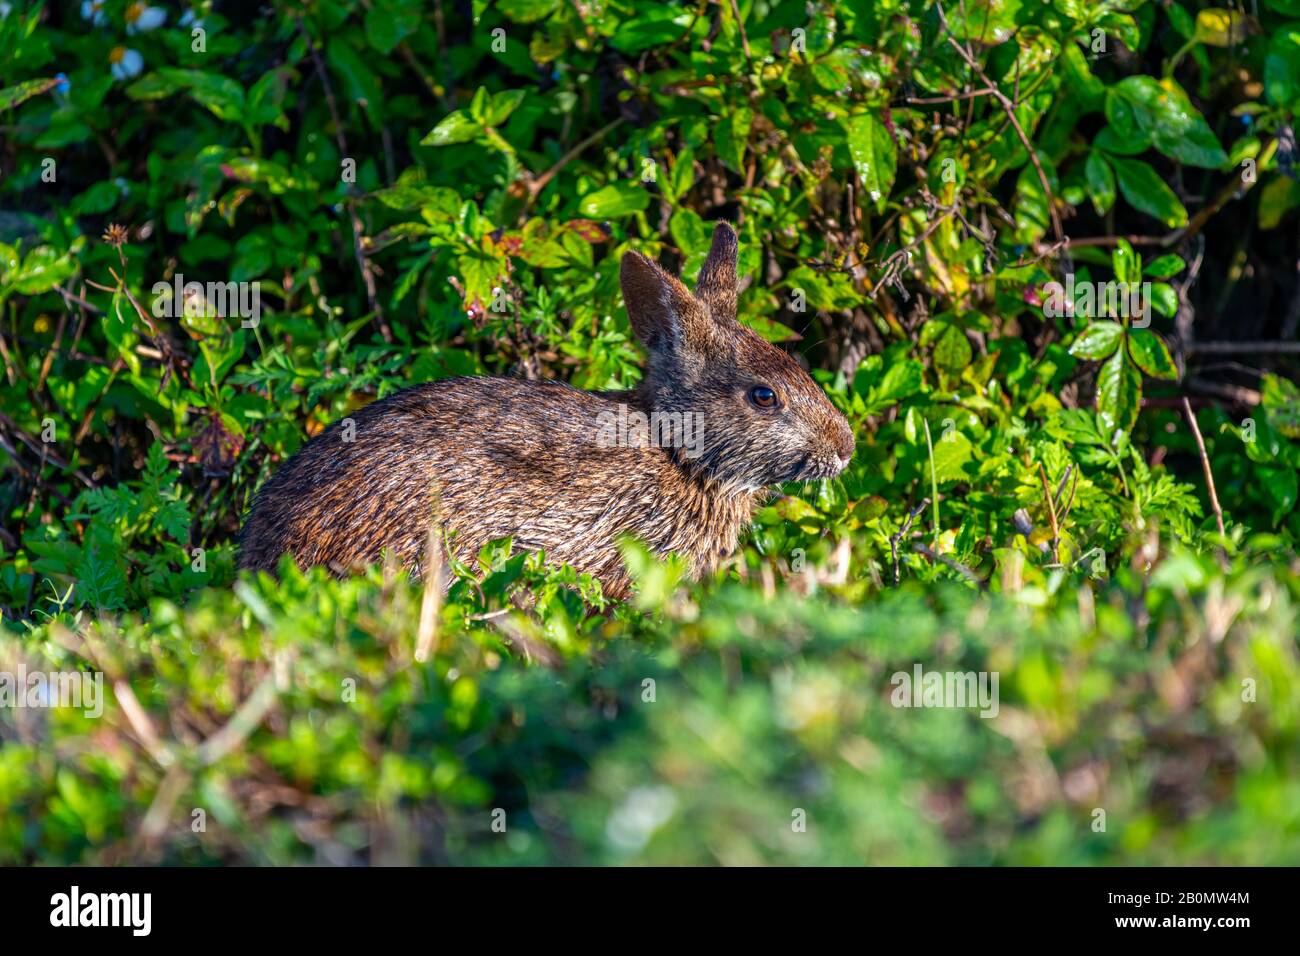 A Marsh Rabbit (Sylvilagus palustris) in the Ritch Grissom Memorial Wetlands, Viera, Florida, USA. Stock Photo